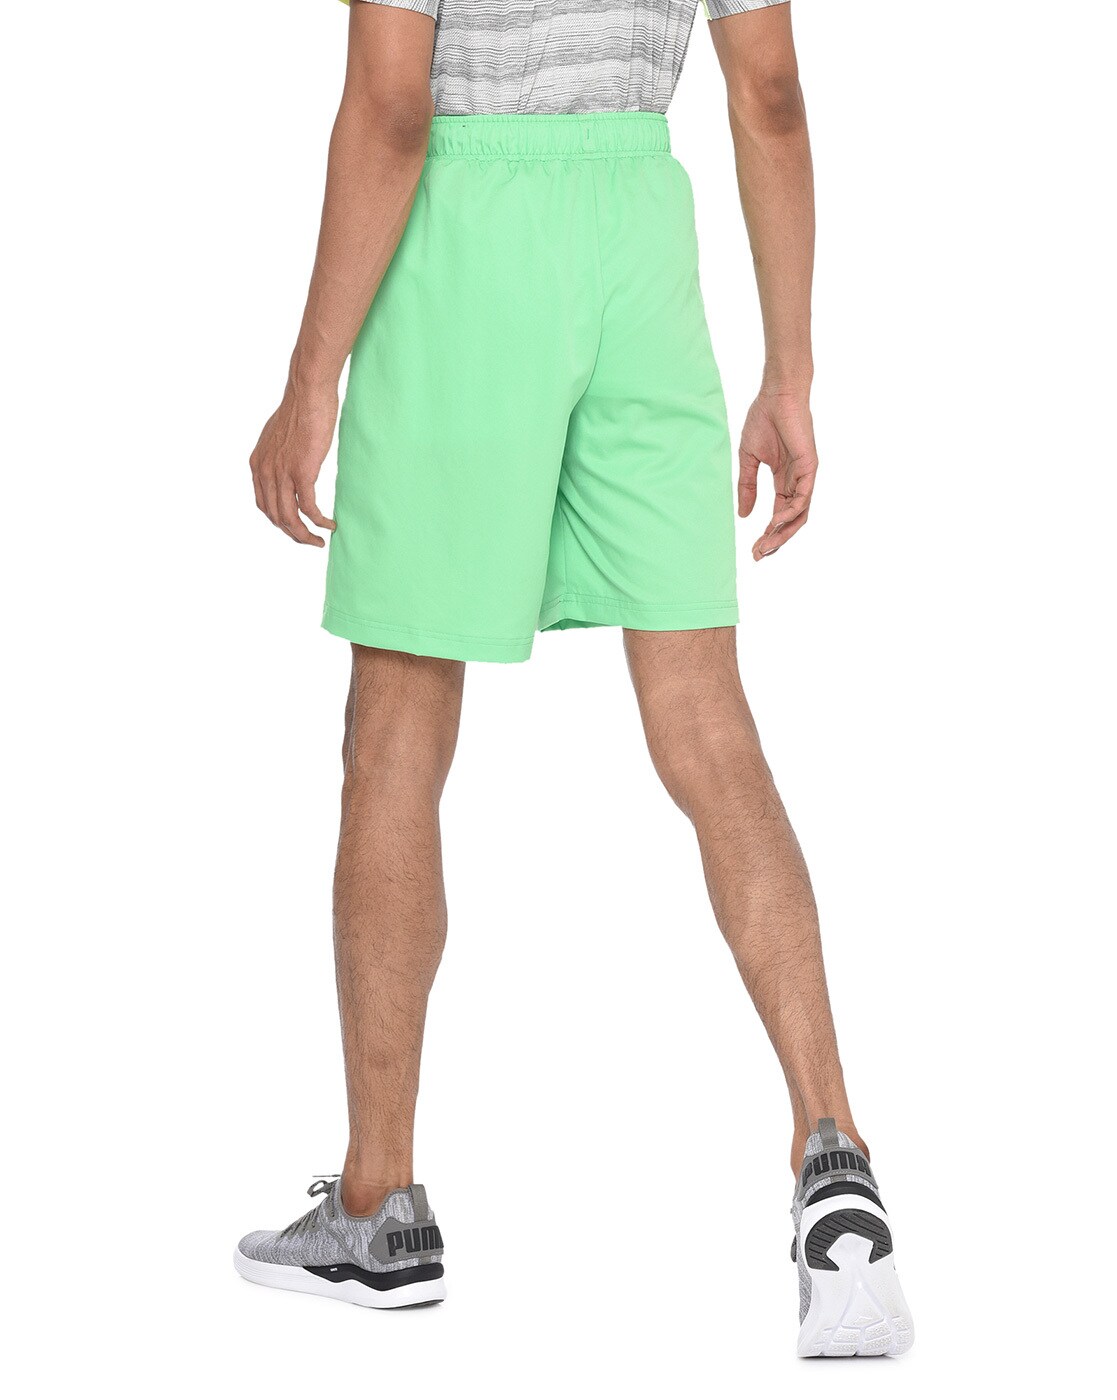 green puma shorts